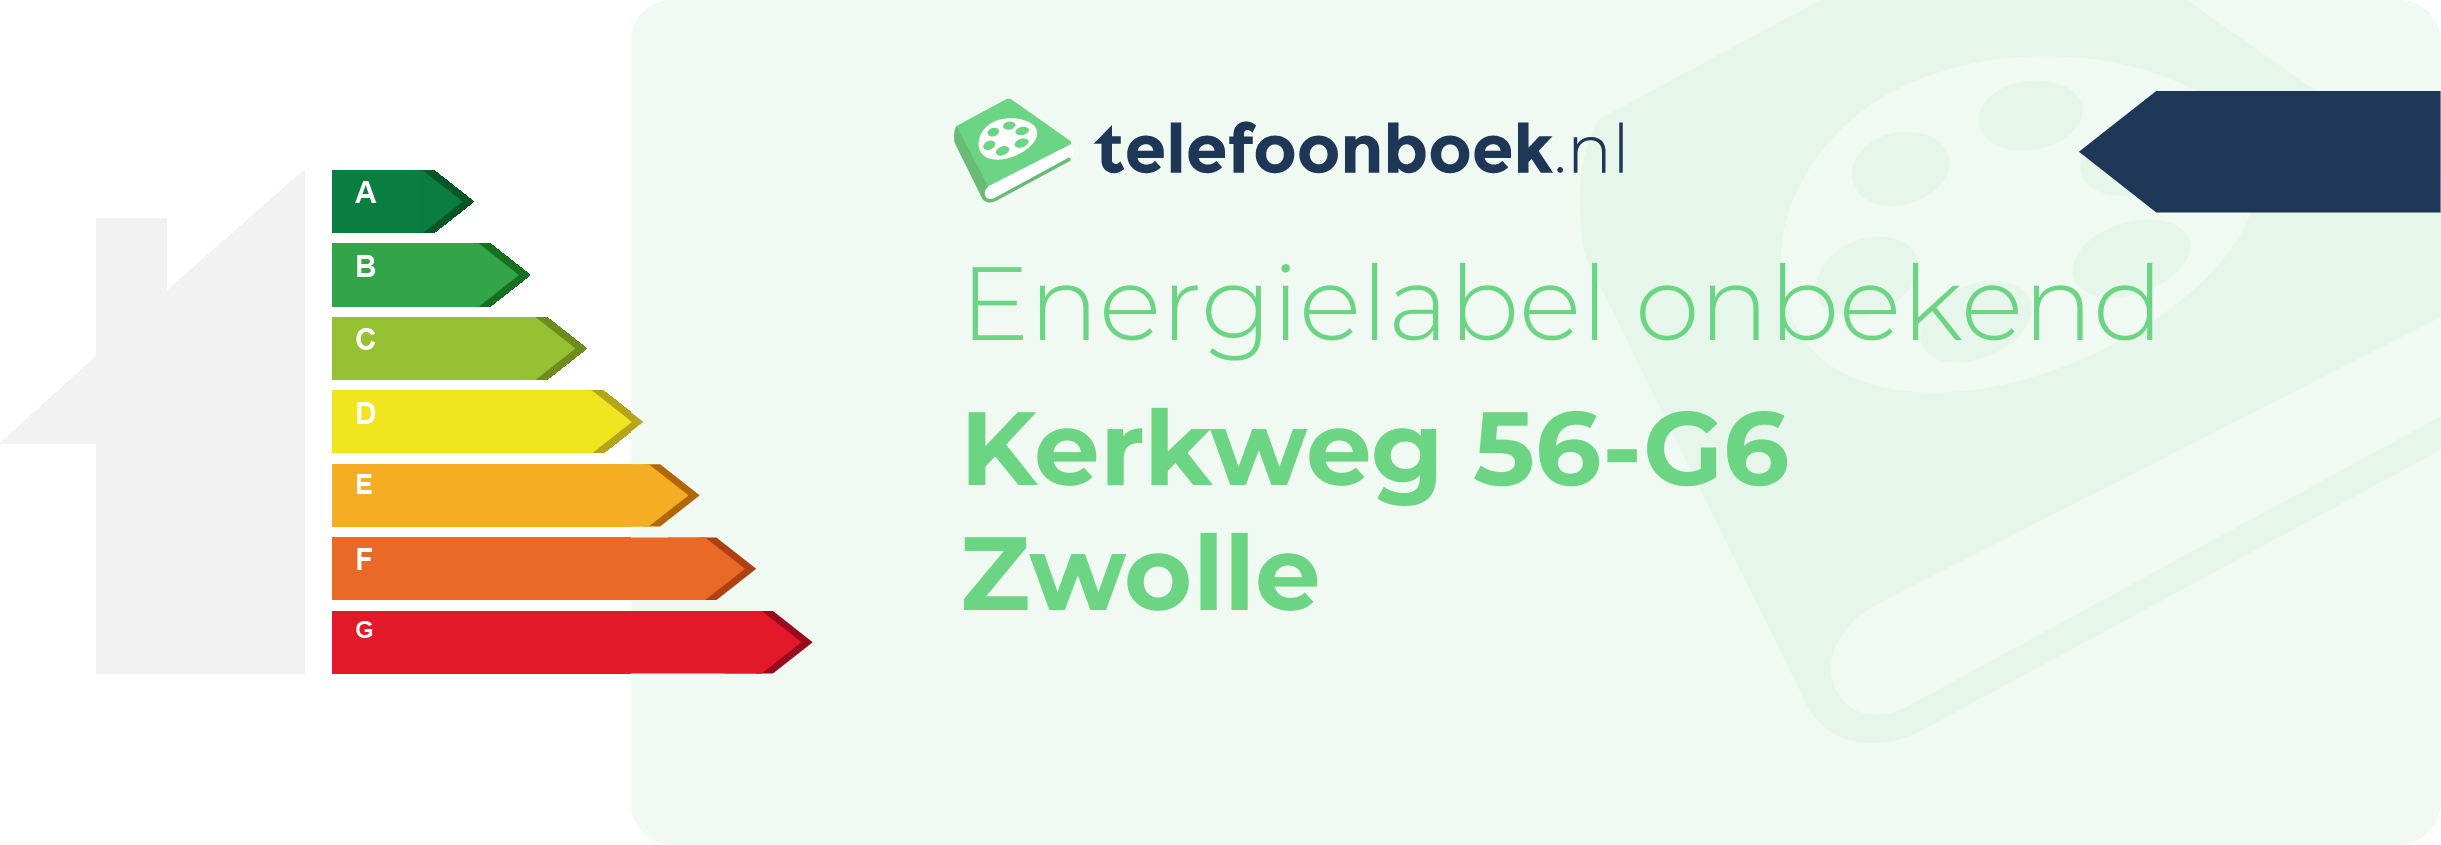 Energielabel Kerkweg 56-G6 Zwolle